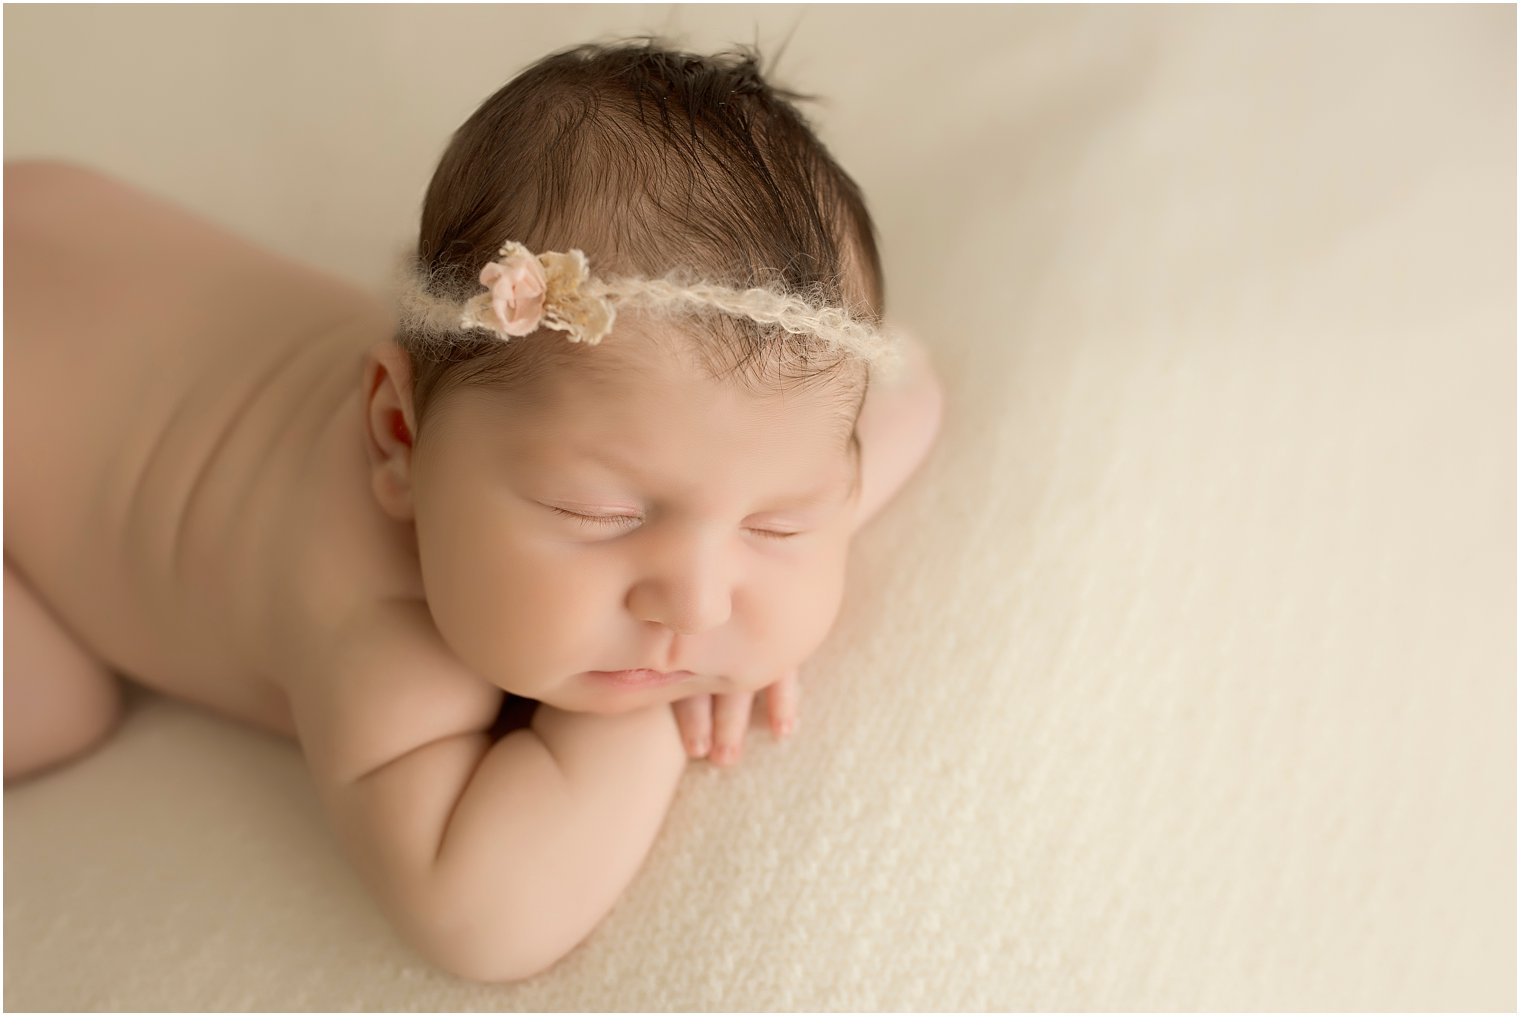 Newborn baby girl on cream blanket